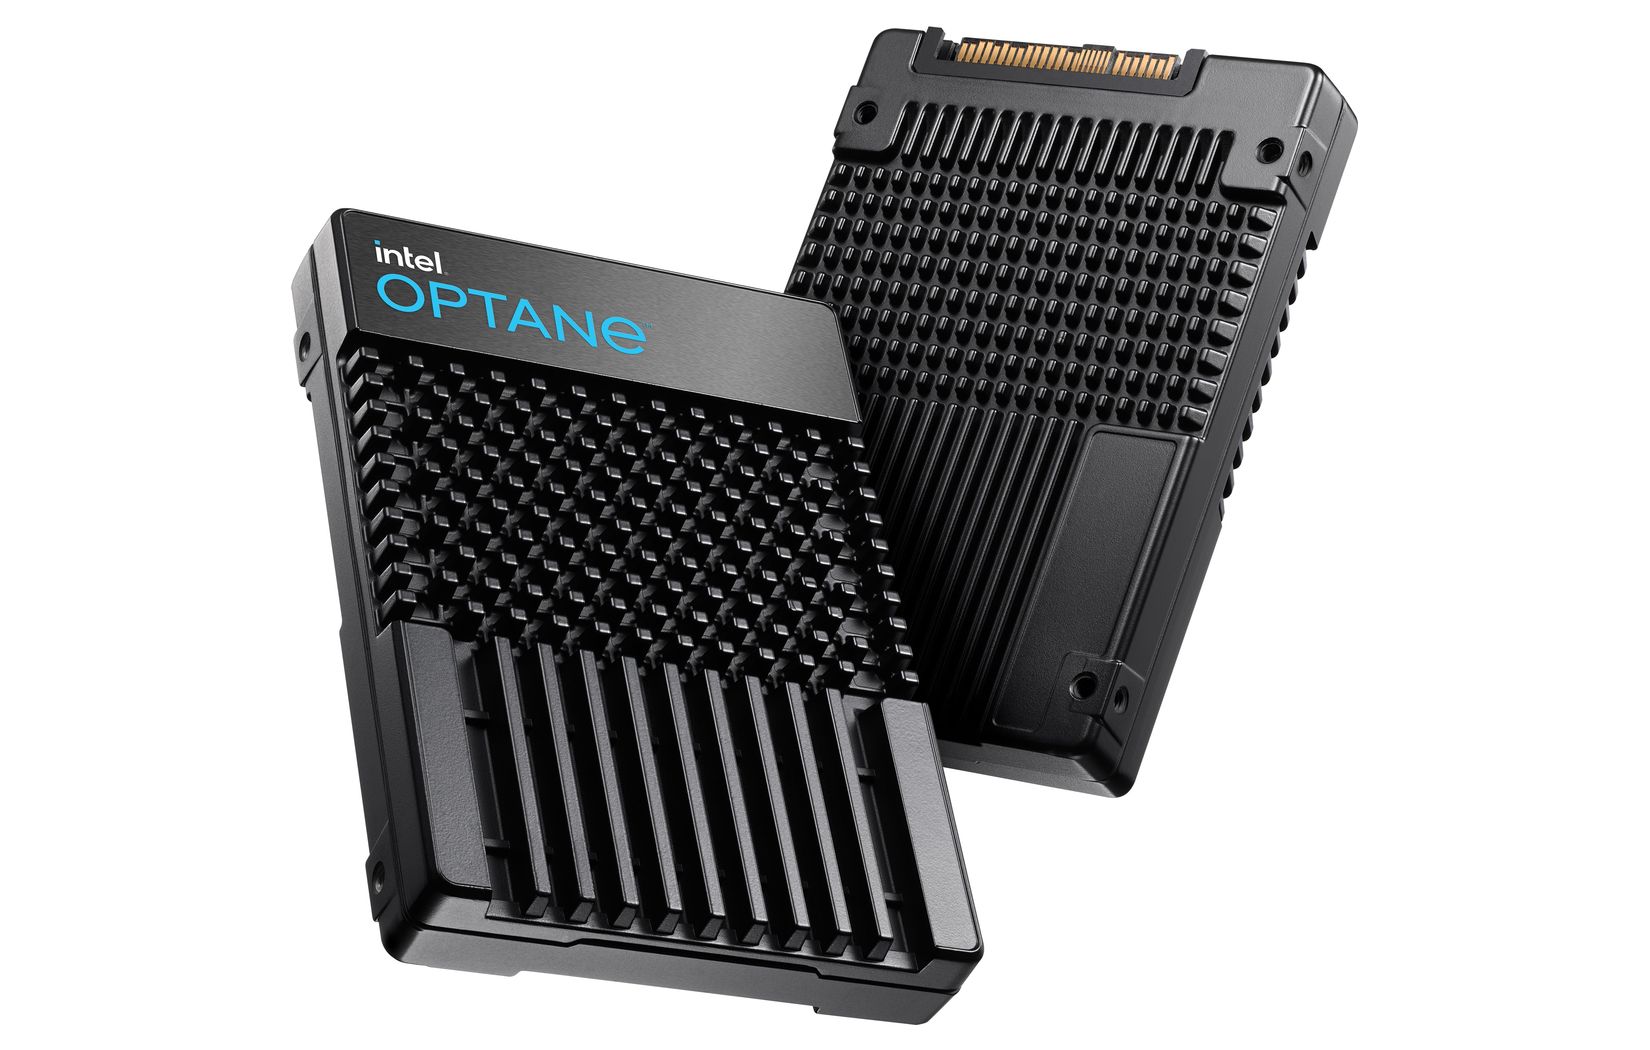 intel optane ssd p5800x 1 videocardz Intel เปิดตัว Intel Optane SSD P5800X เป็น SSD ที่เร็วที่สุดในโลกในงาน Data Center และ Intel Optane Memory H20 ประสิทธิภาพสูงเน้นใช้งานทั่วไปรุ่นใหม่ล่าสุด